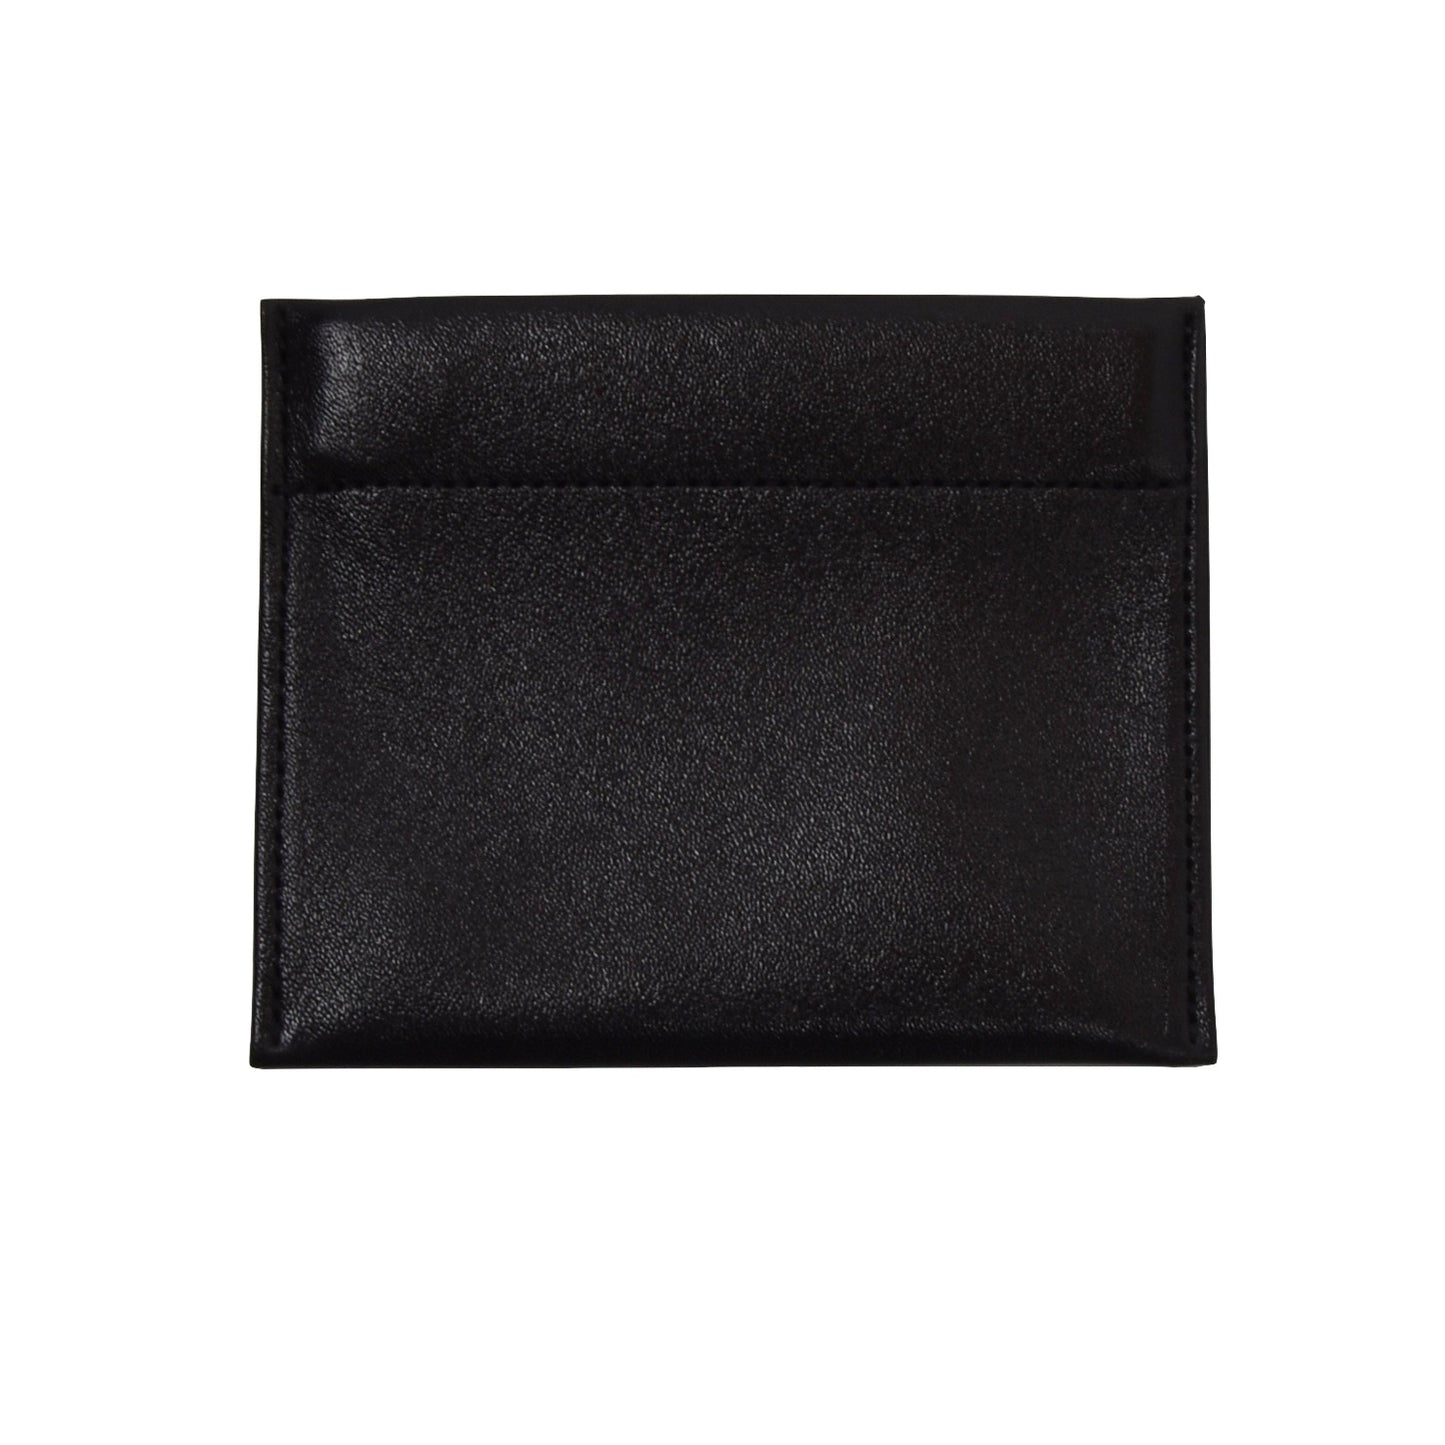 Apollo Kangaroo Leather Wallet & Coin Purse - Black